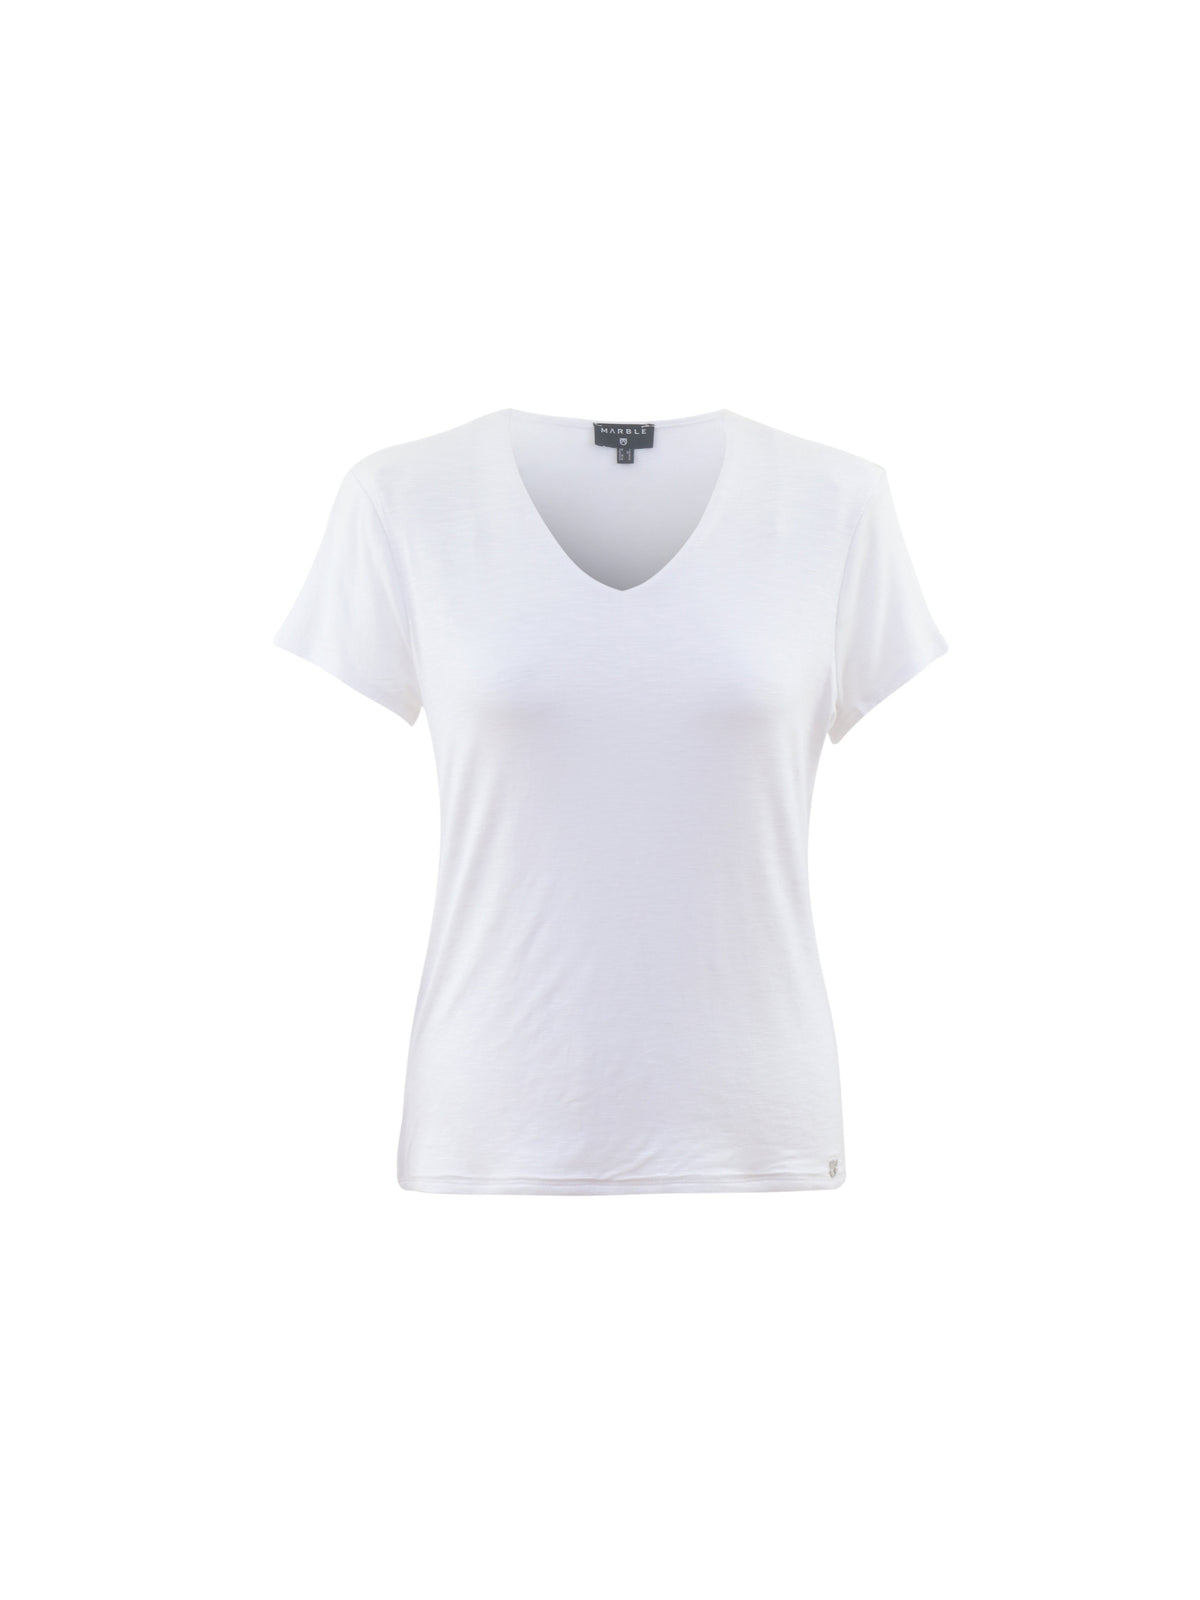 Marble White T-Shirt